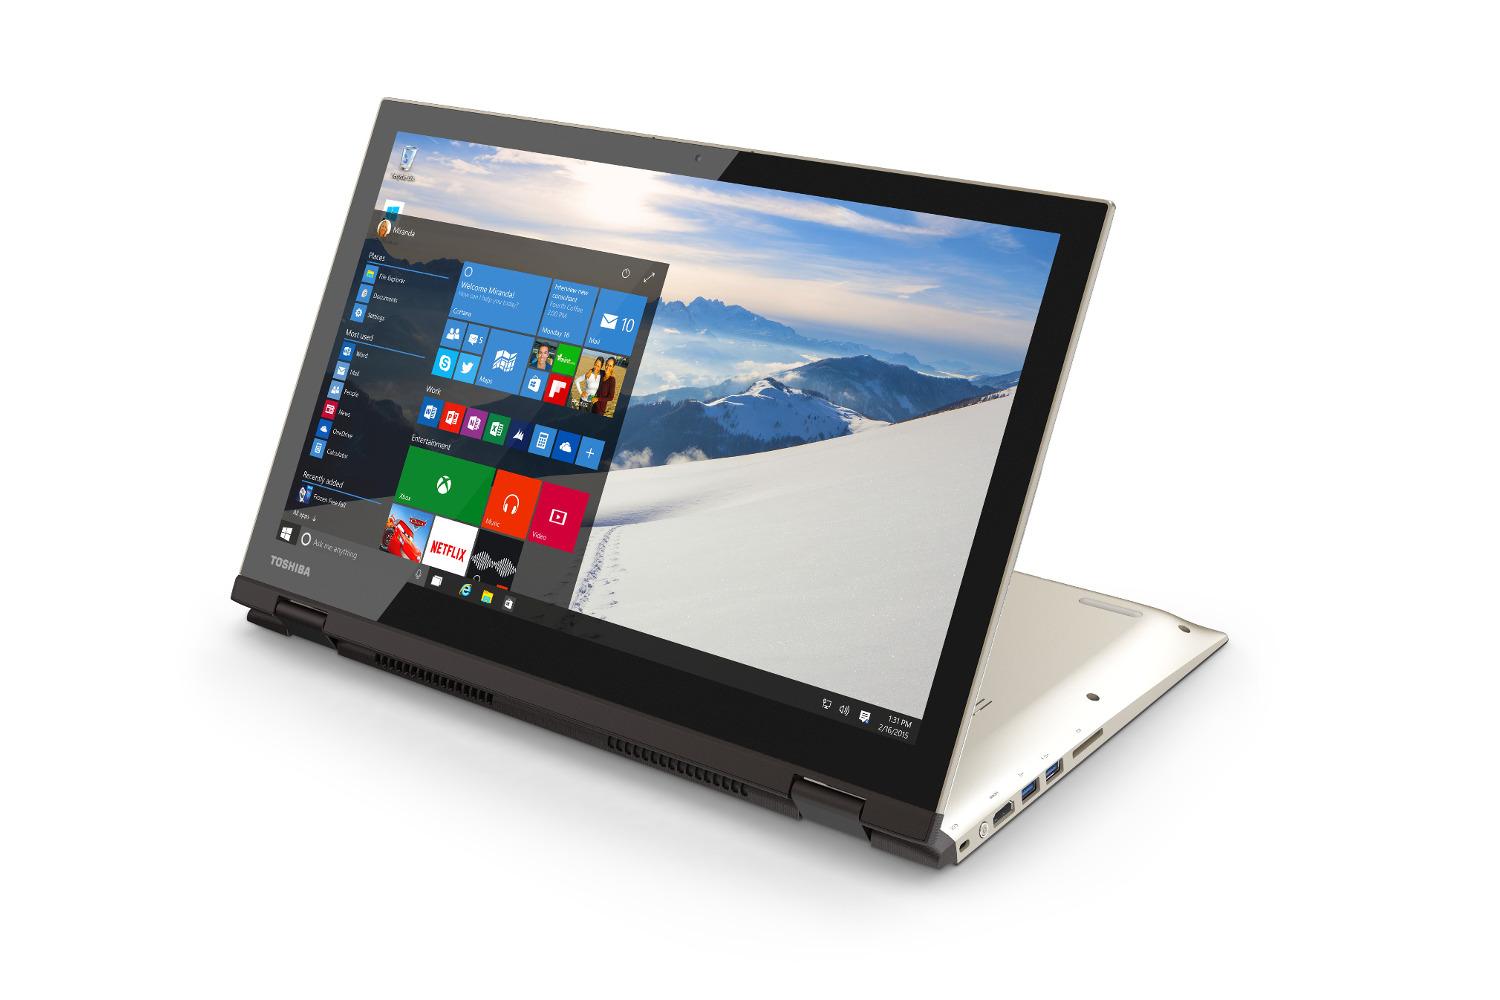 toshiba details new satellite laptops designed for windows 10 fusion 15 l55w angle4